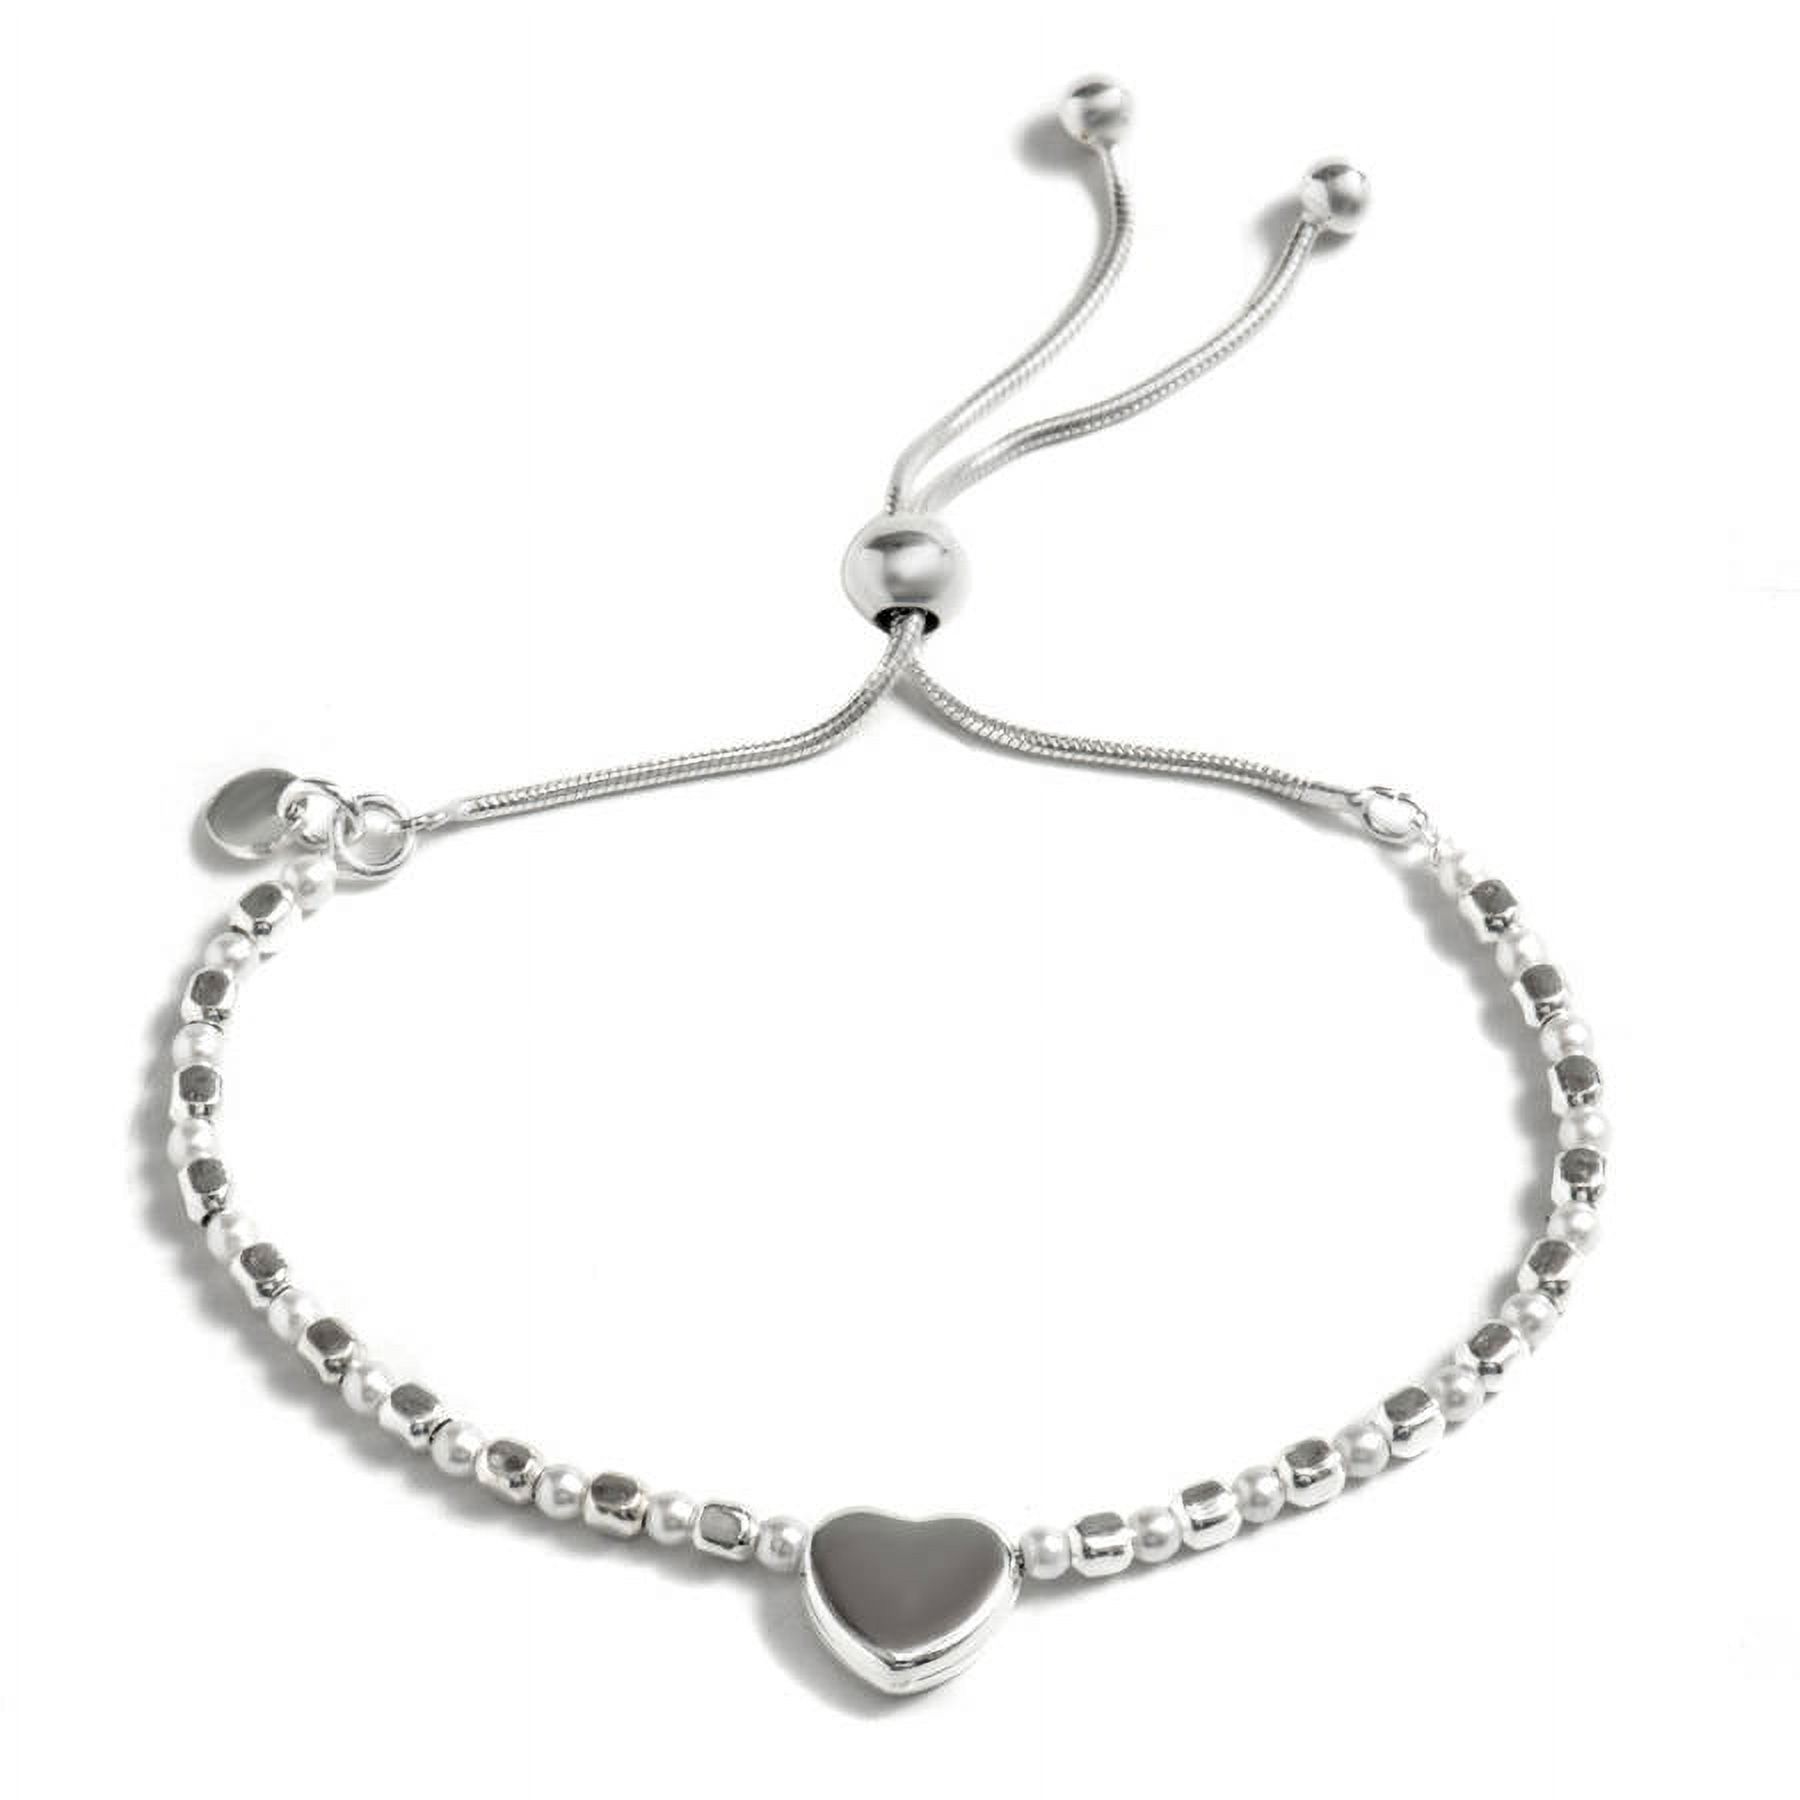 Freshwater Pearl Sterling Silver Mini Heart Charm Adjustable Bracelet - image 1 of 2